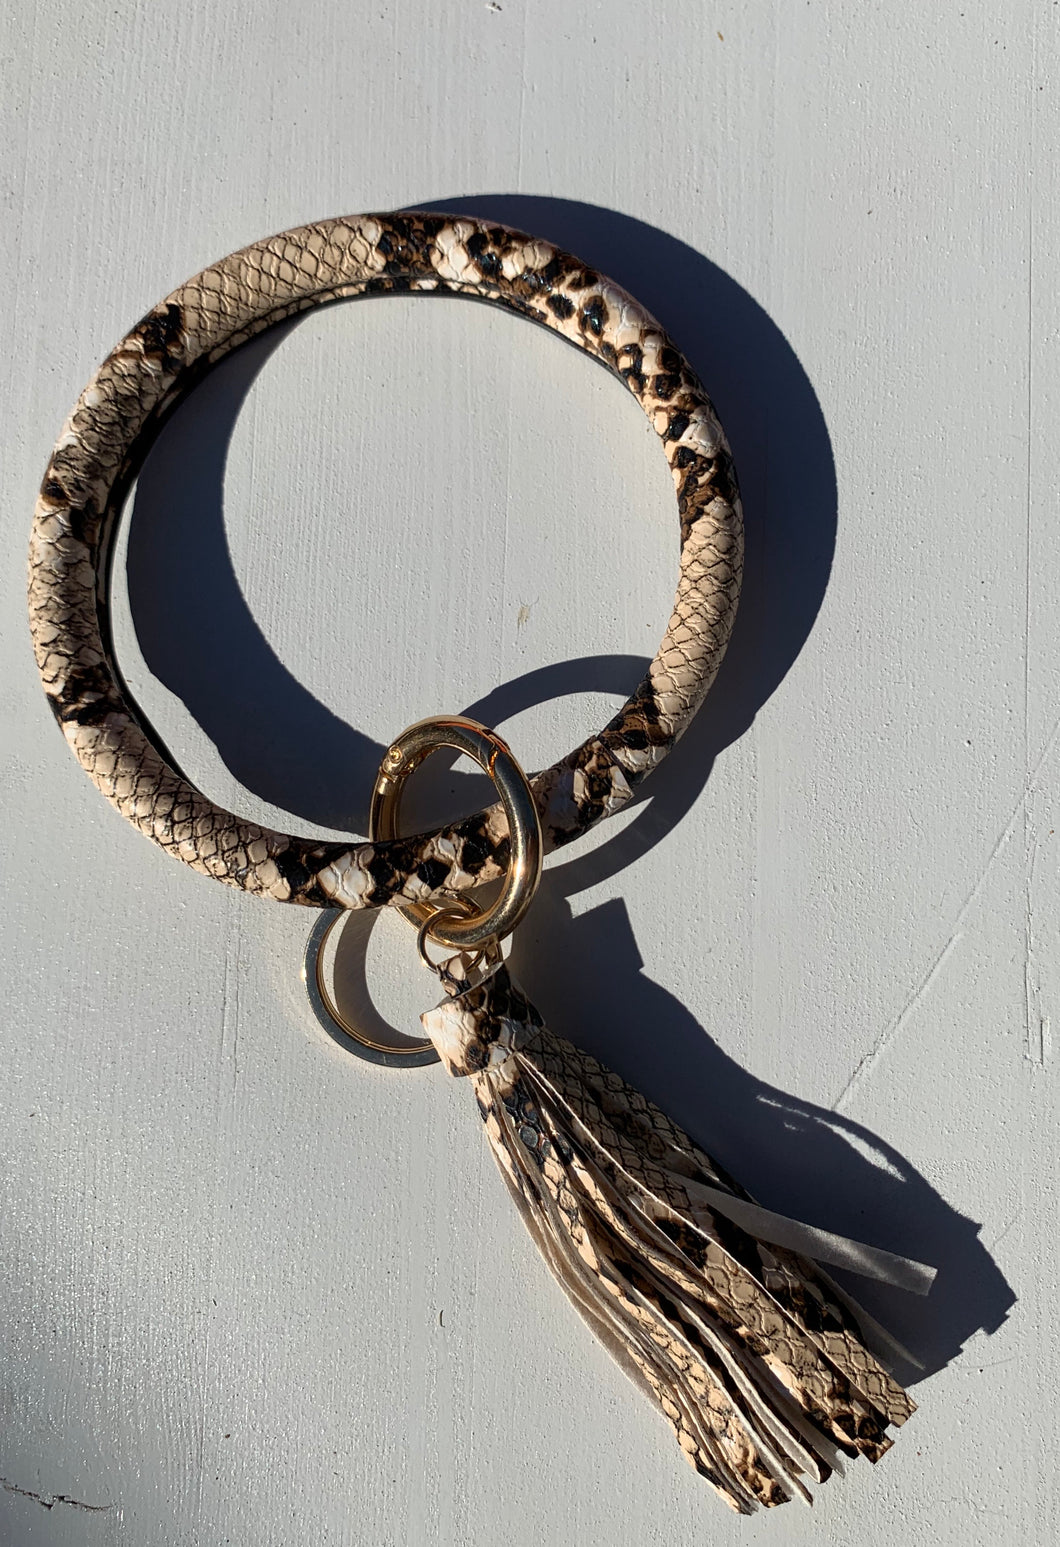 Snakeskin bracelet keychain